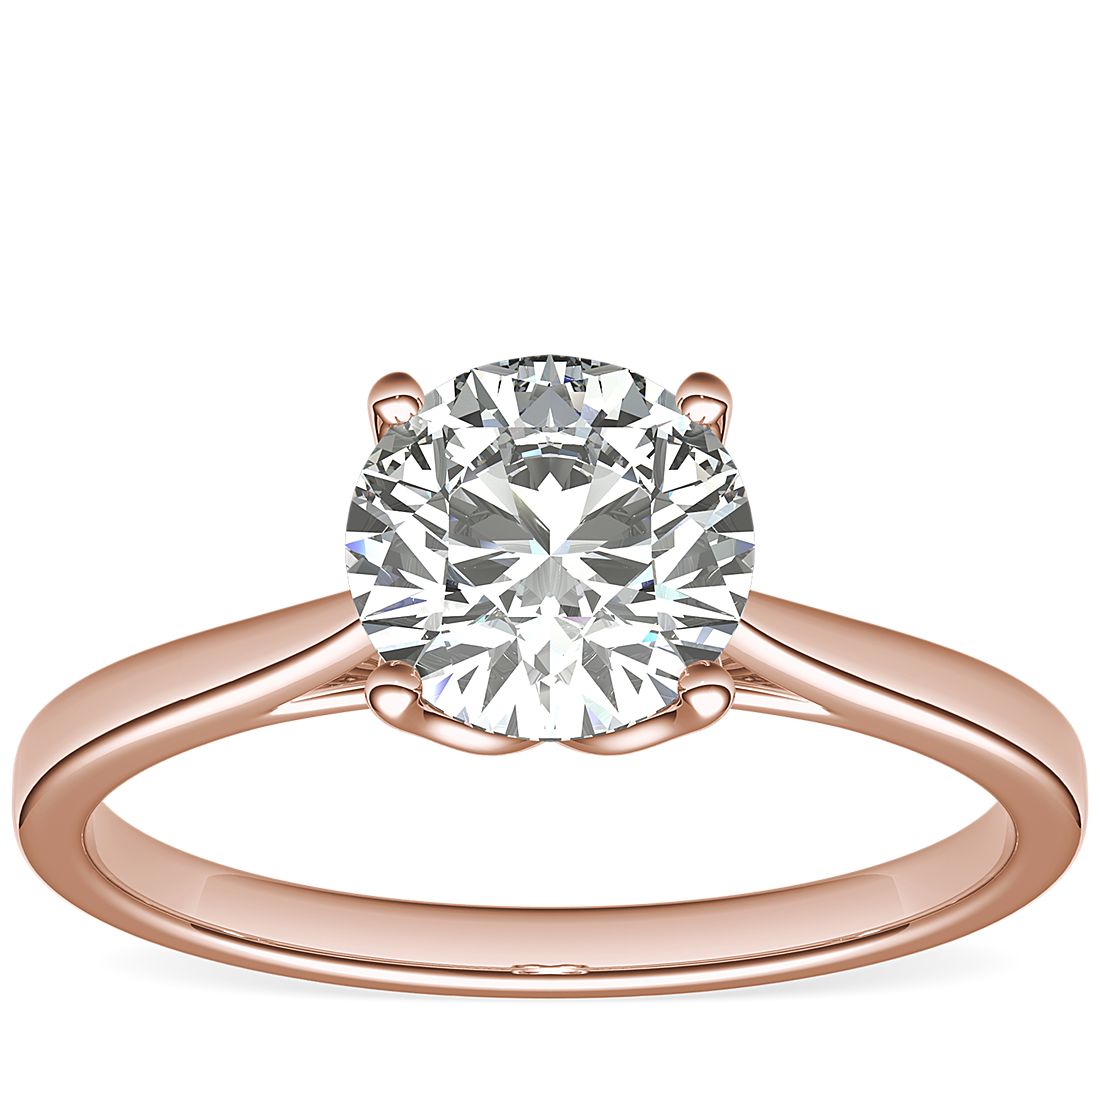 Blue Nile Monique Lhuillier 1.00-Carat Round-Cut Diamond Ring in Rose Gold